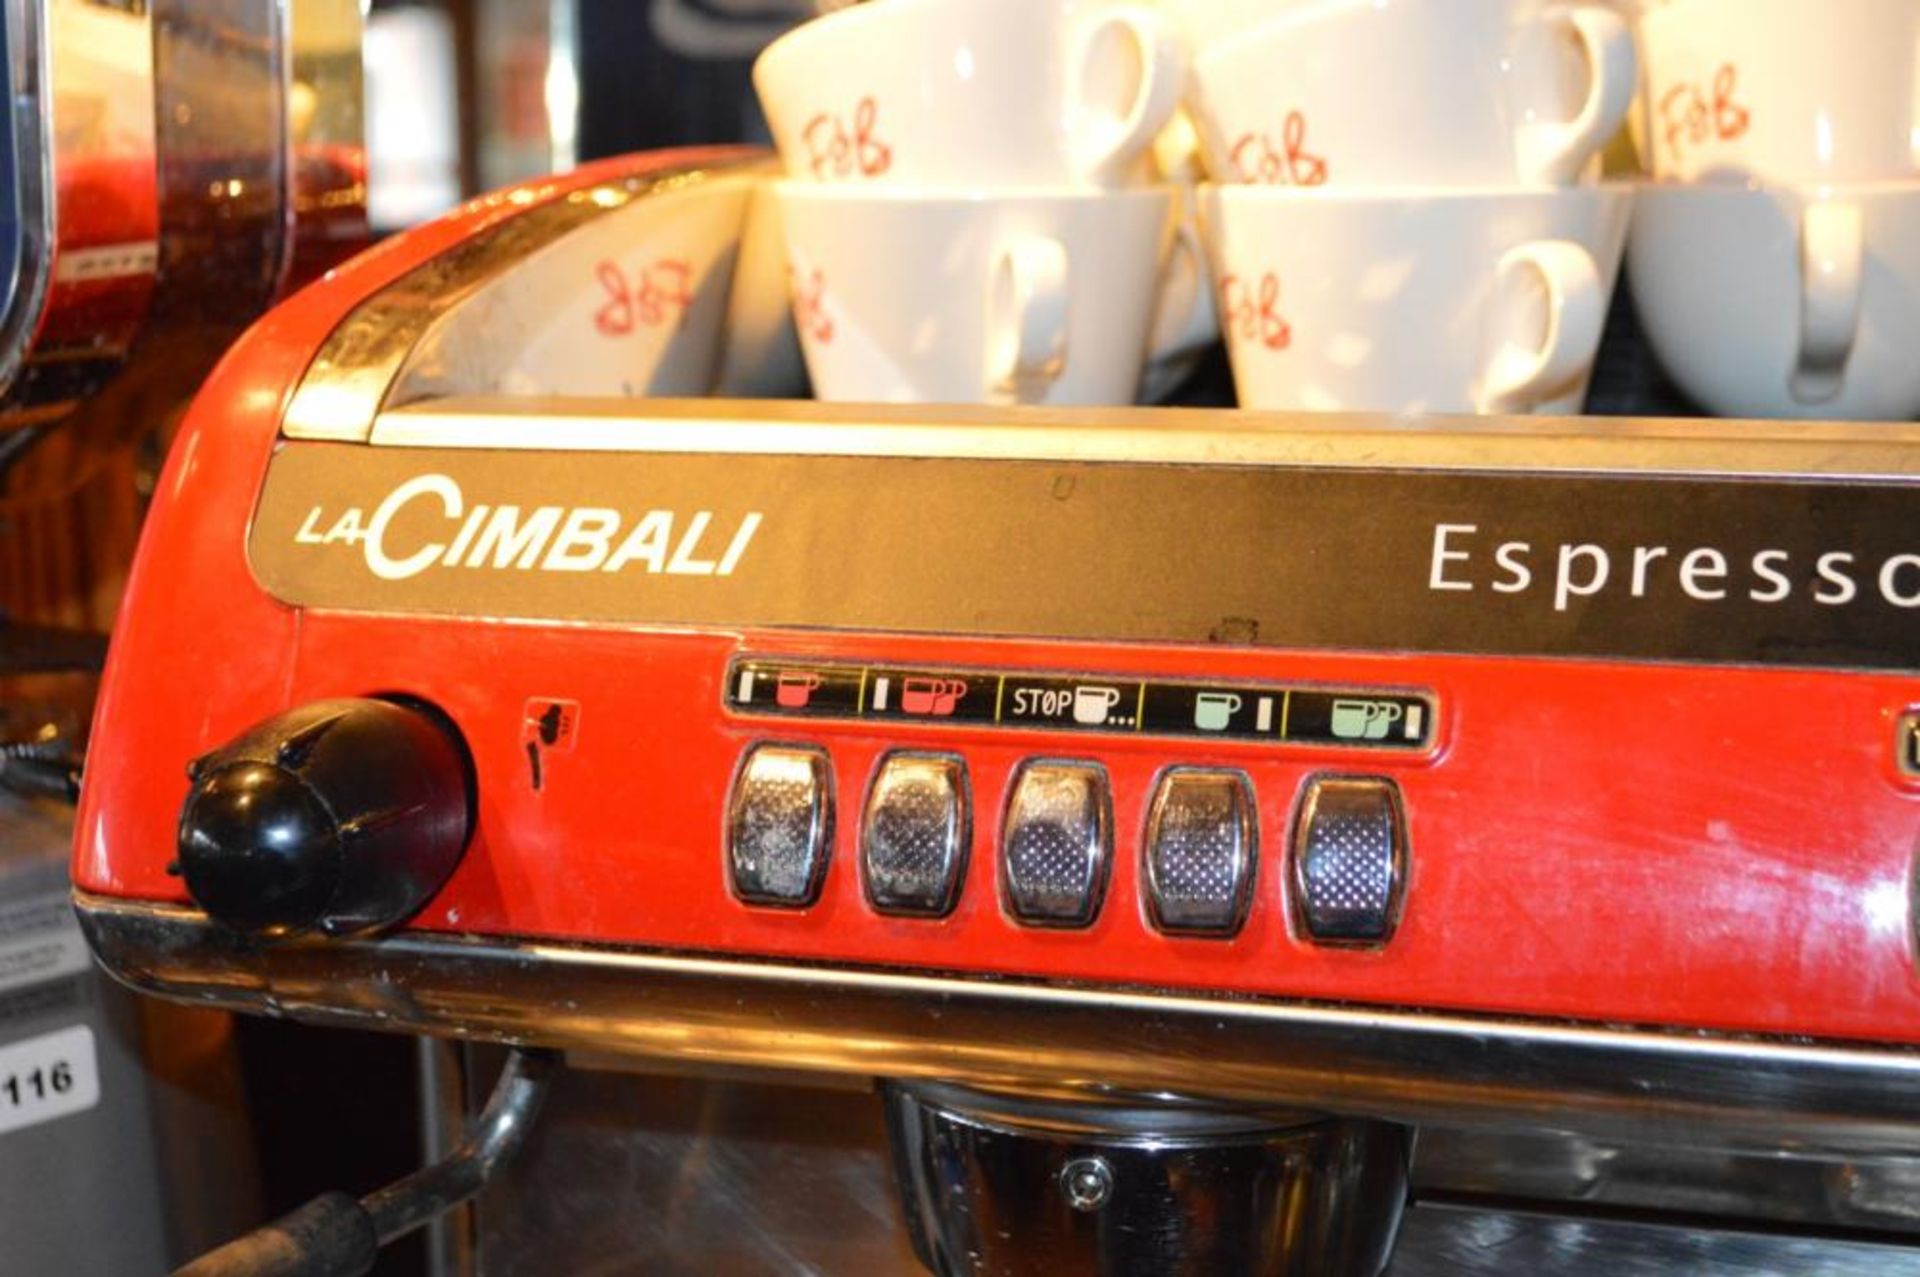 1 x La Cimbalie Espresso & Cappucino 3 Group Coffee Machine in Red - Model M39 DT3 TE - Ref FB115 - - Image 5 of 7